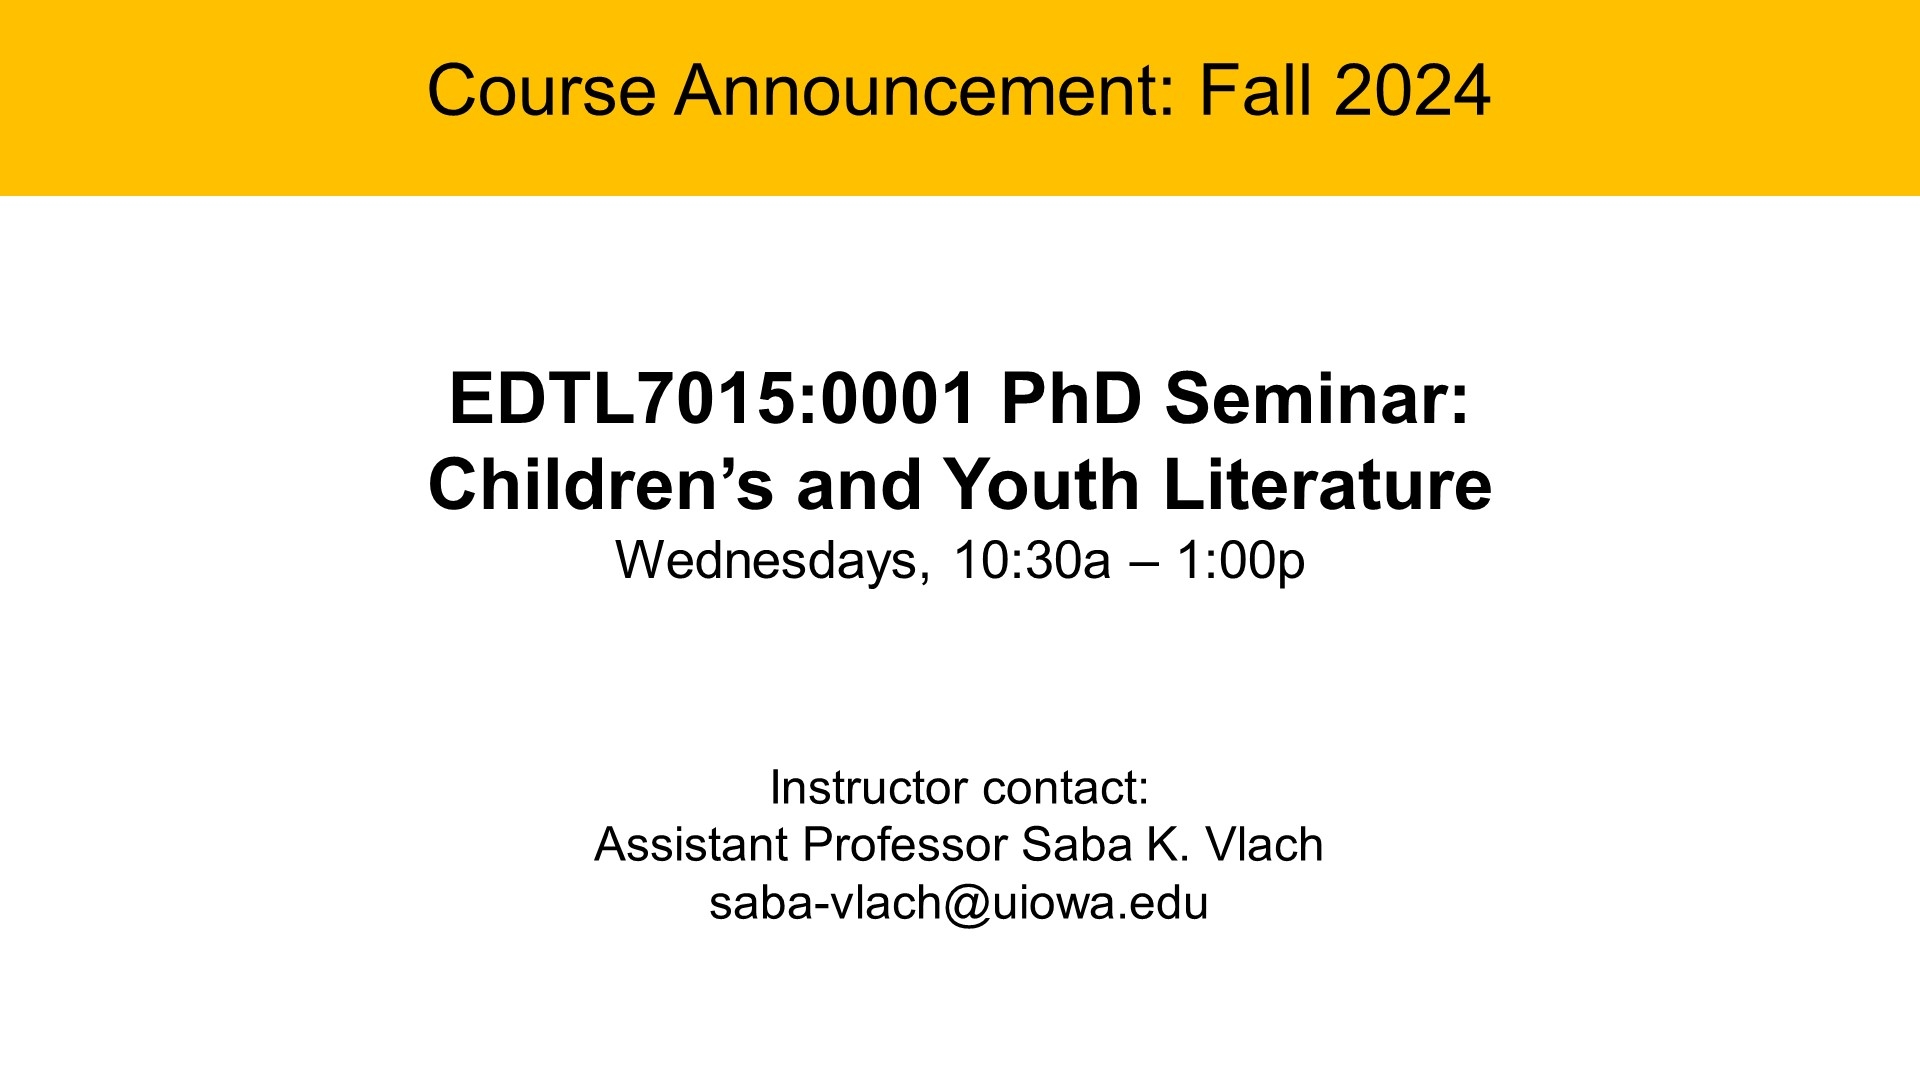 Fall 2024 course: EDTL7015:0001 PhD Seminar: EDTL7015:0001 PhD Seminar: Children’s and Youth Literature Wednesdays, 10:30a – 1:00p